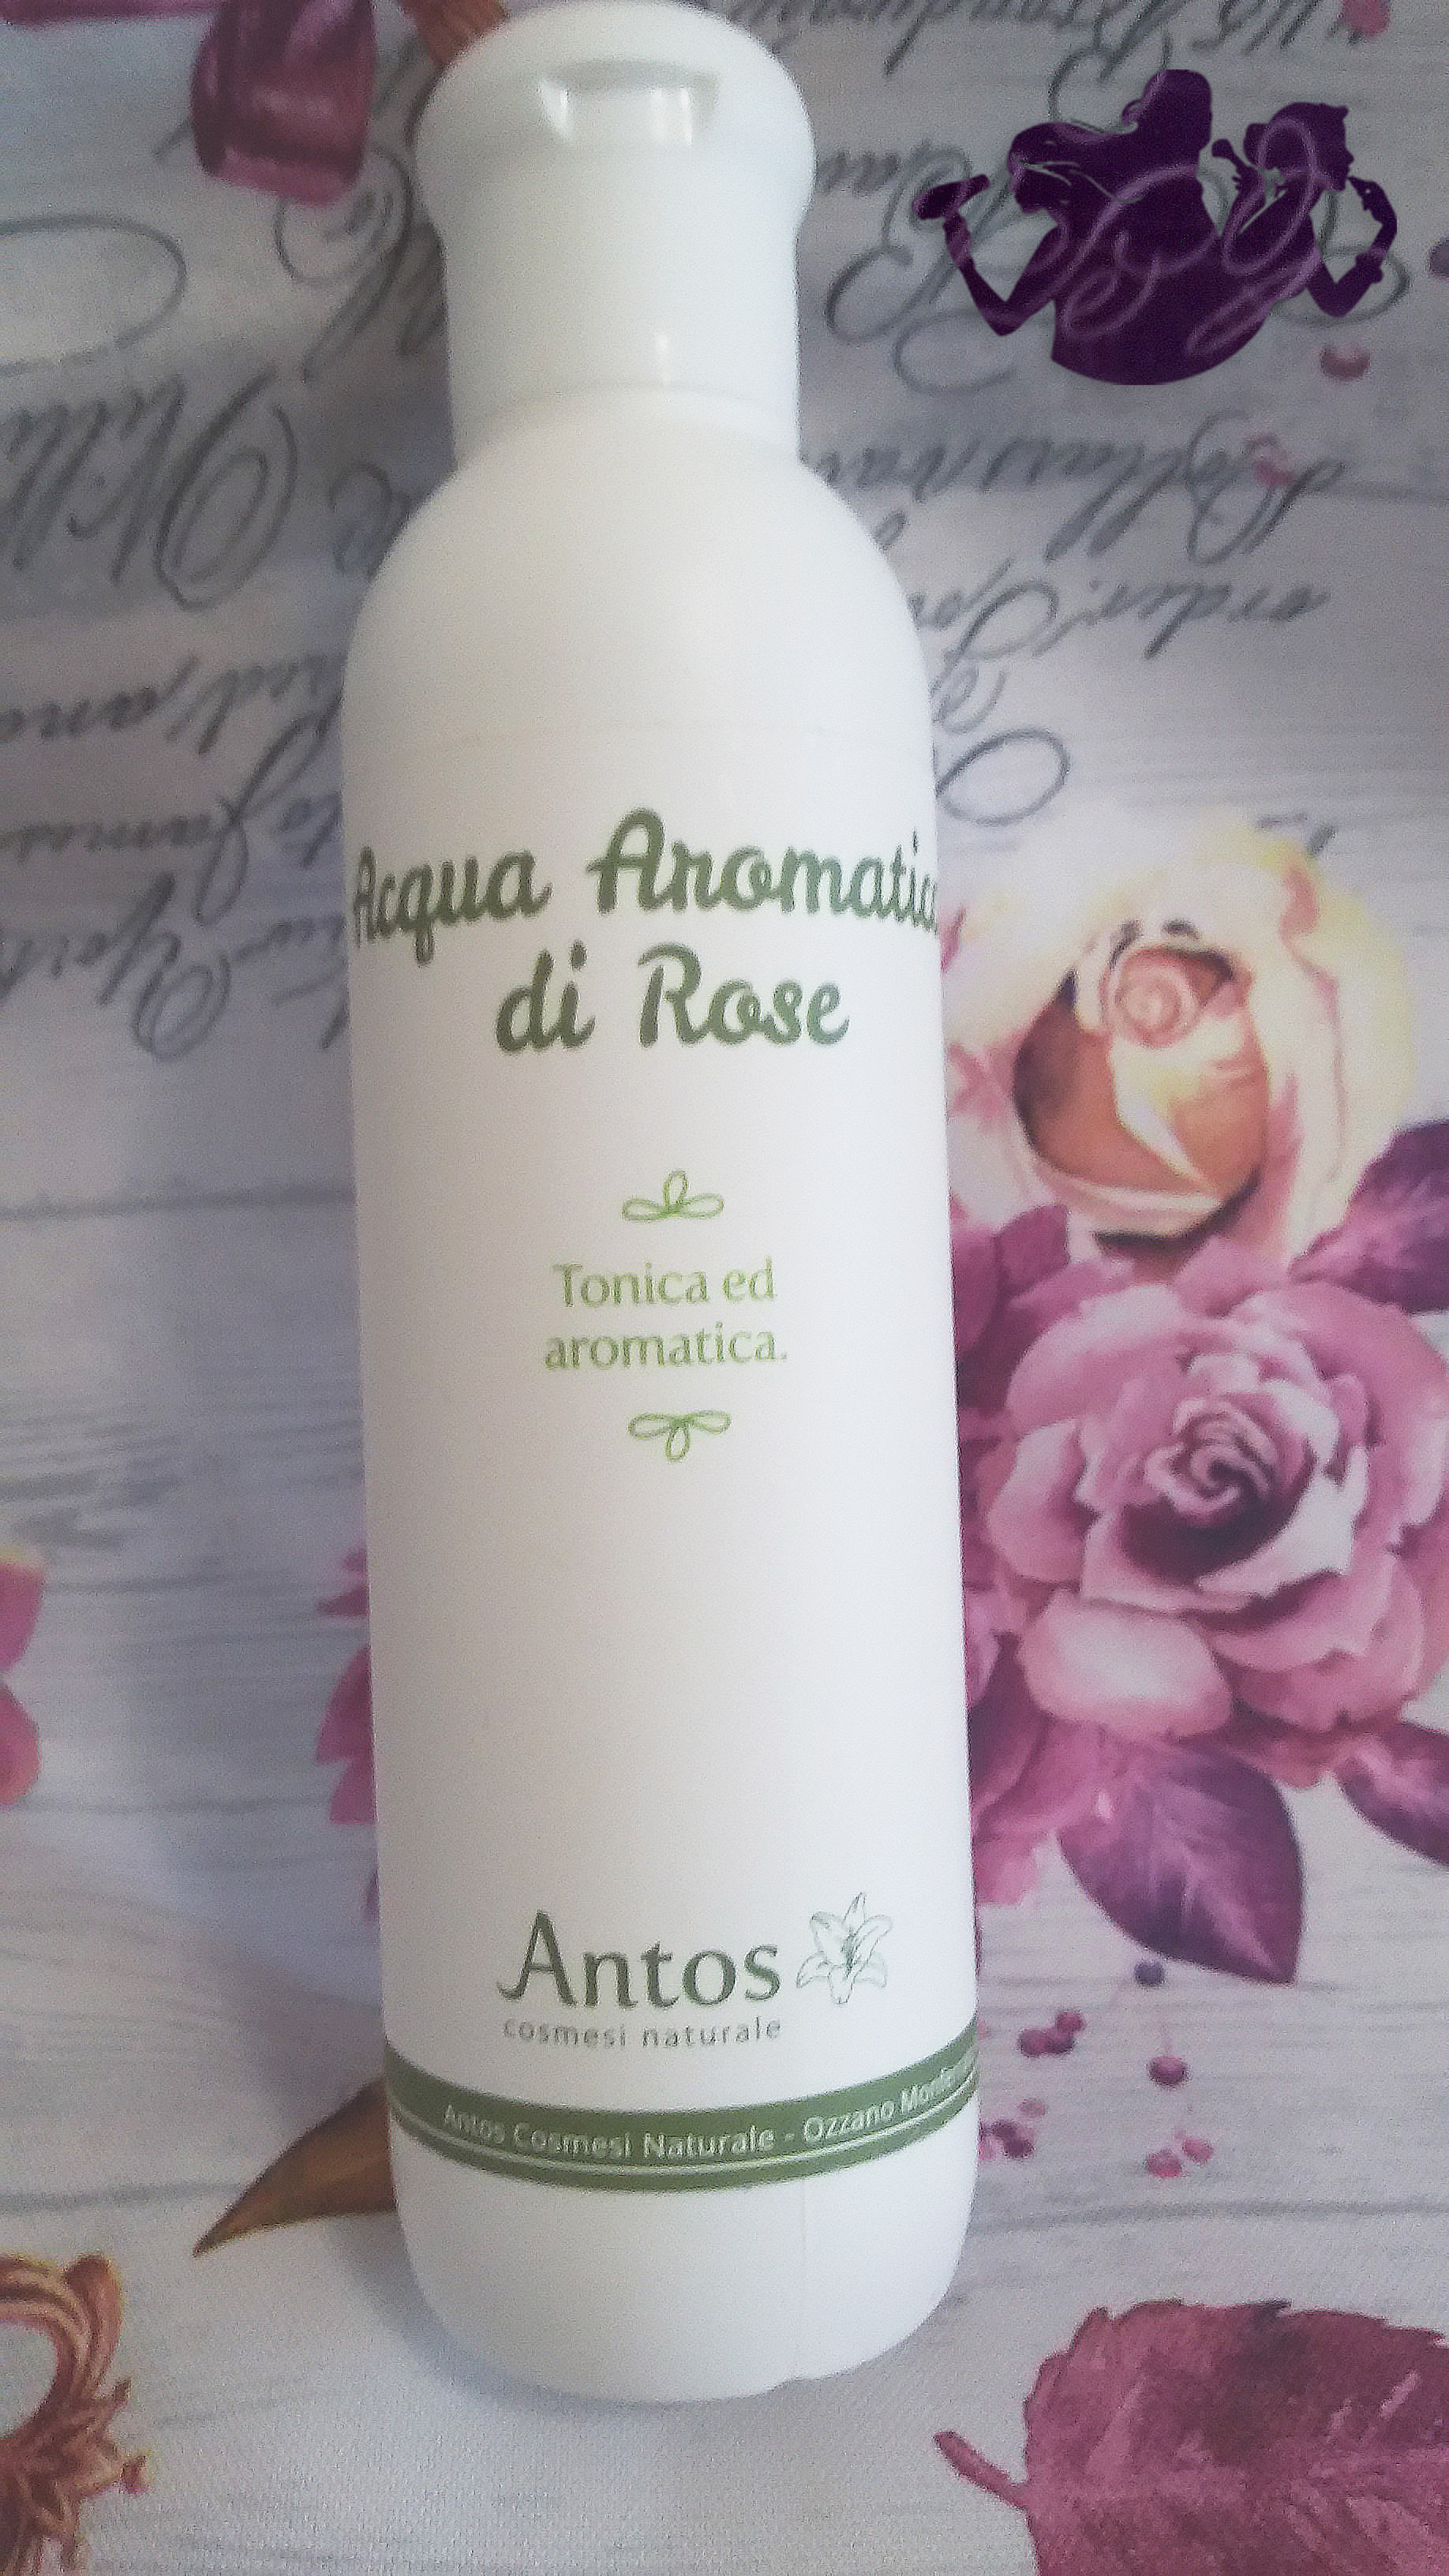 Acqua aromatica di rose, Antos